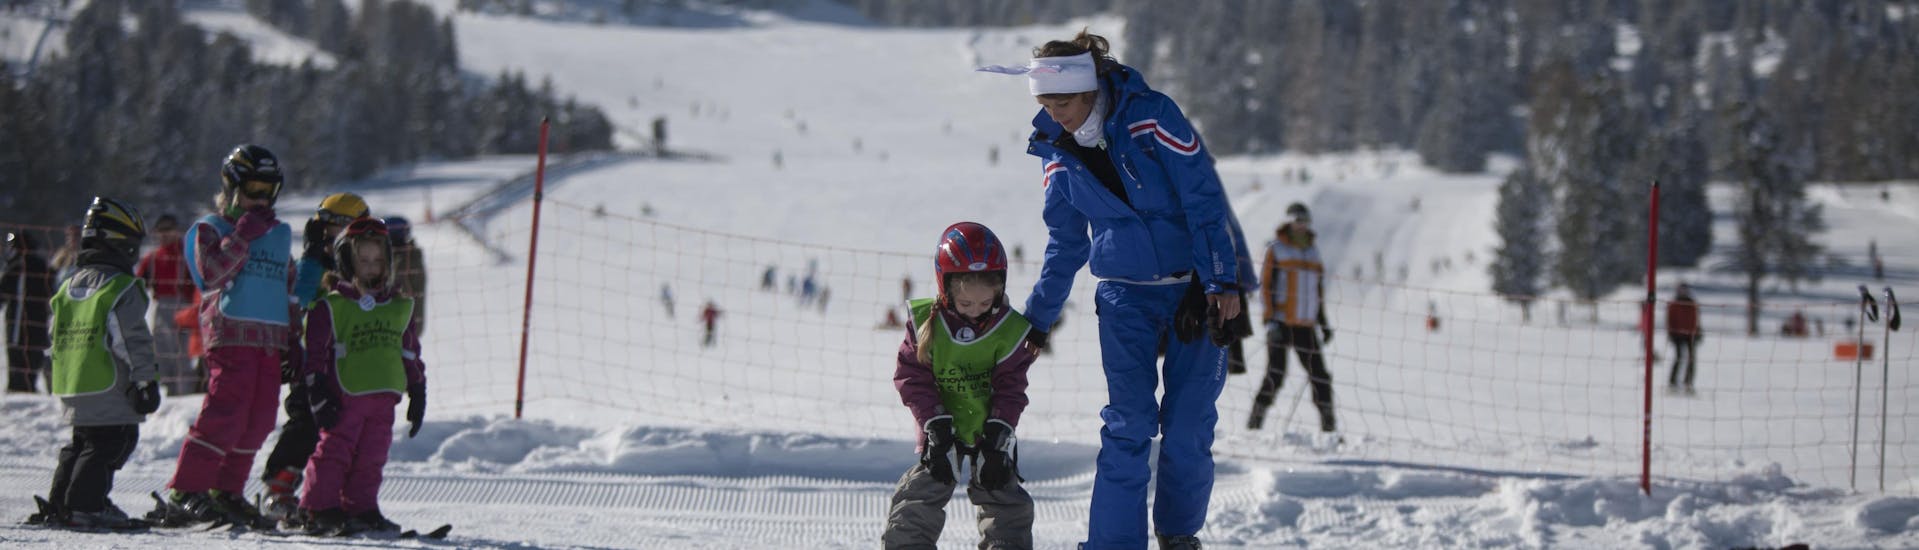 ski-lessons-dutch-SEM-hero